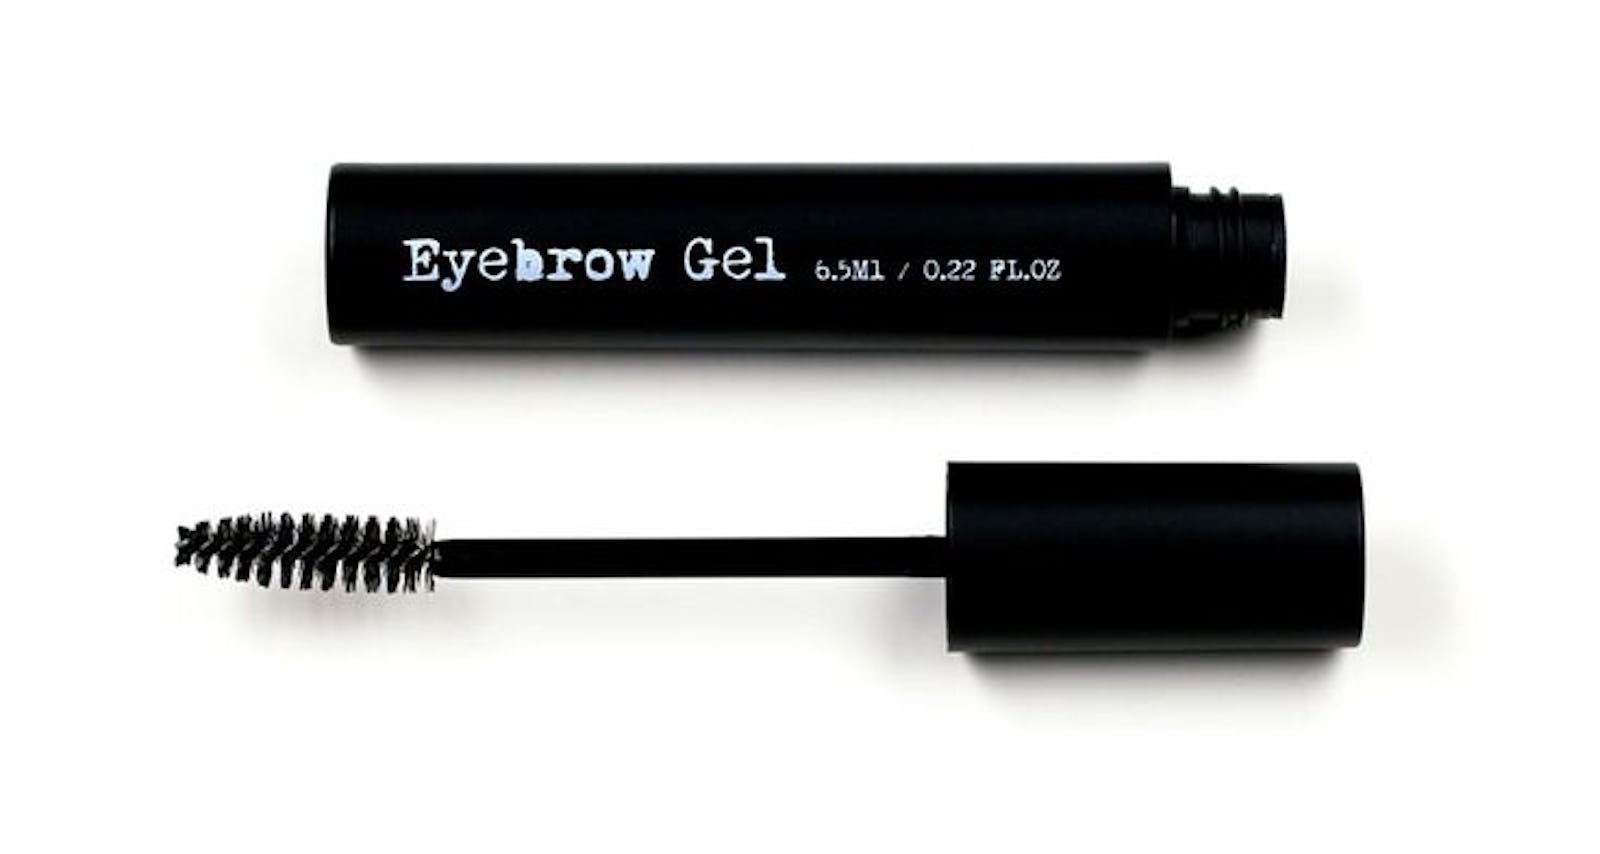 Got2Be Gel For Eyebrows